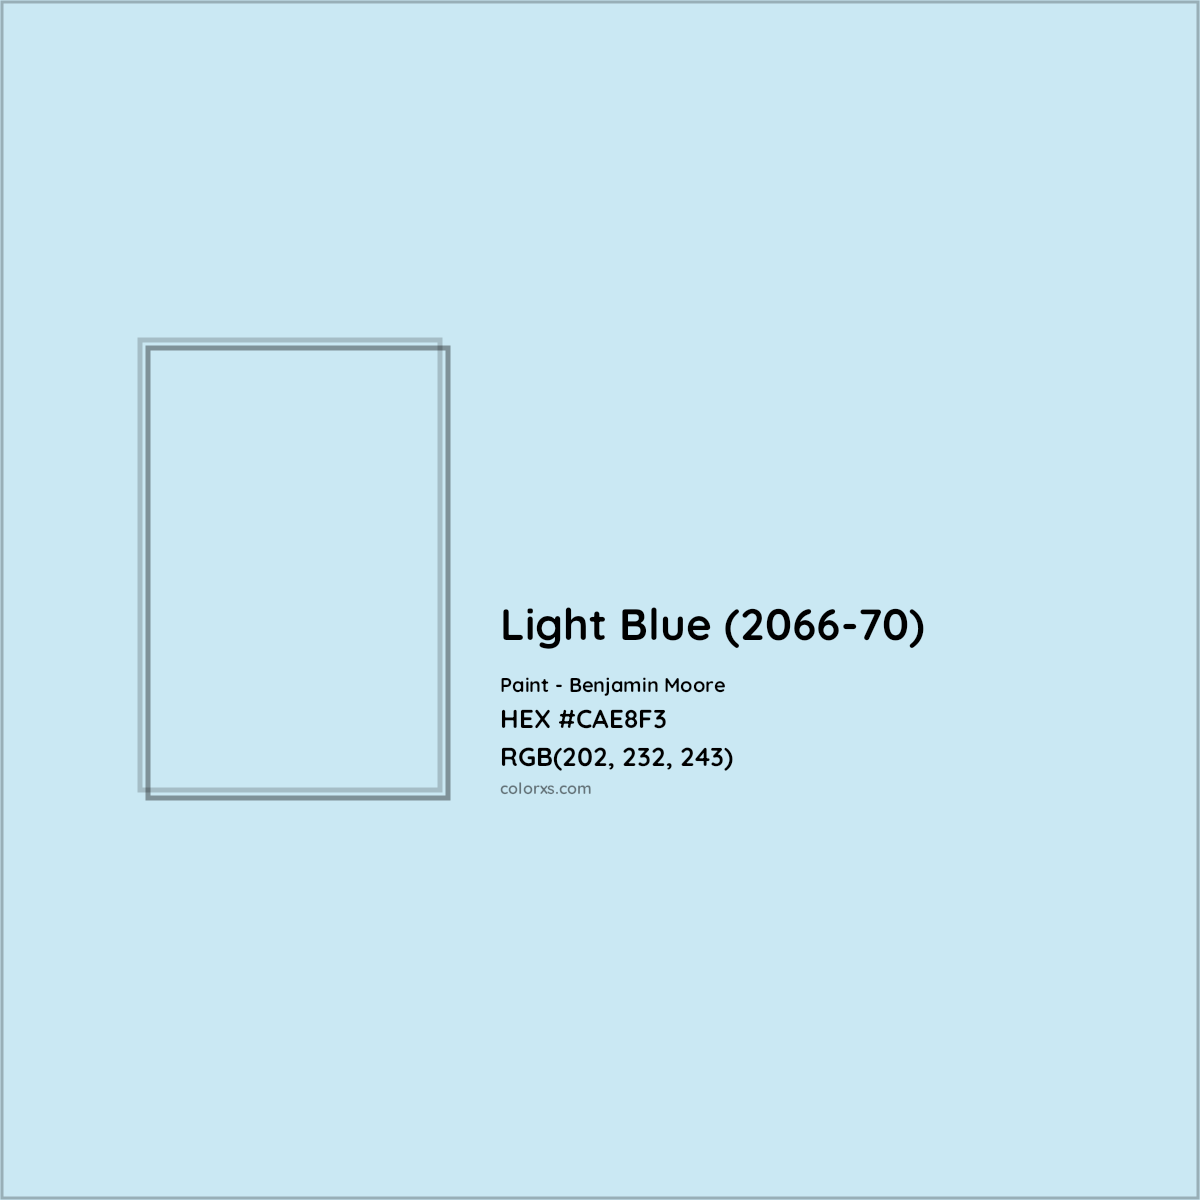 HEX #CAE8F3 Light Blue (2066-70) Paint Benjamin Moore - Color Code